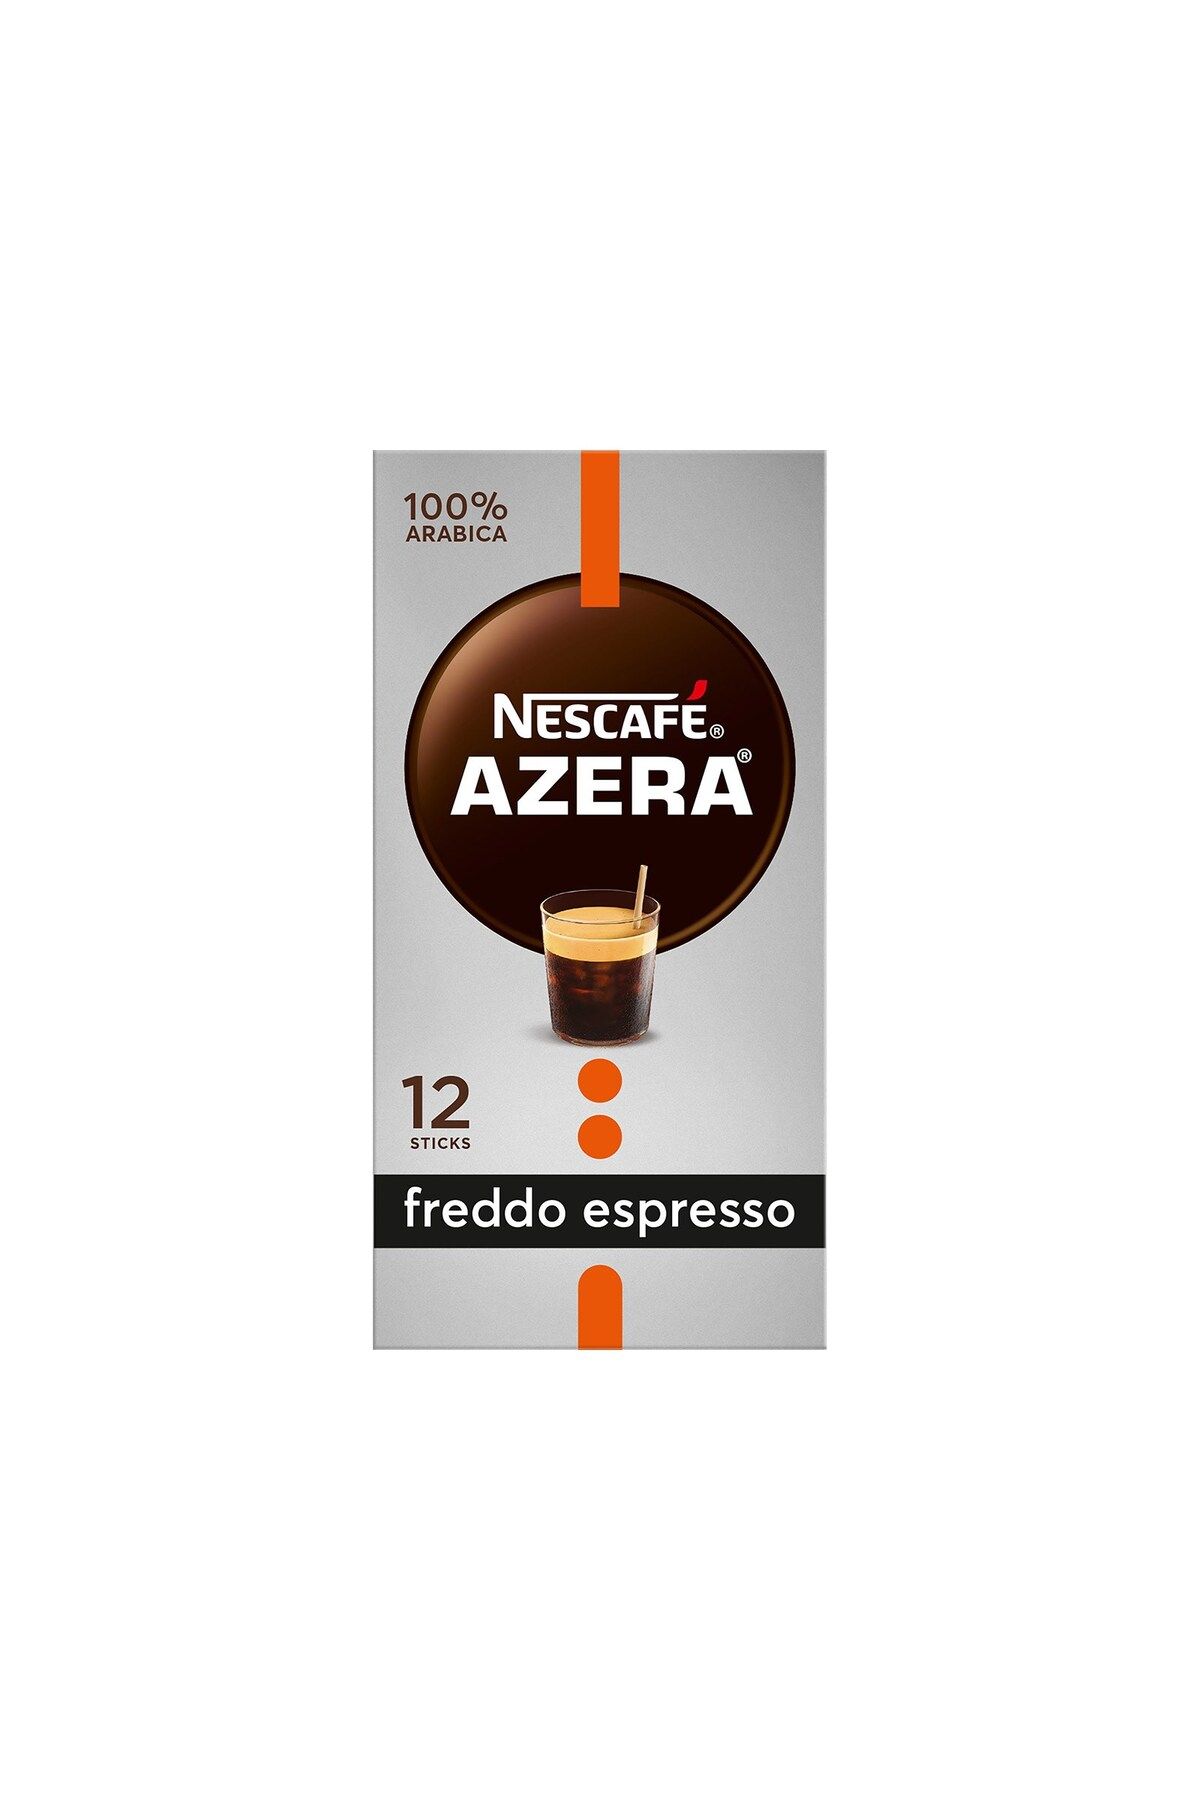 Nescafe ????? espresso ?? sticks azera 100% arabica (12x3.5g)